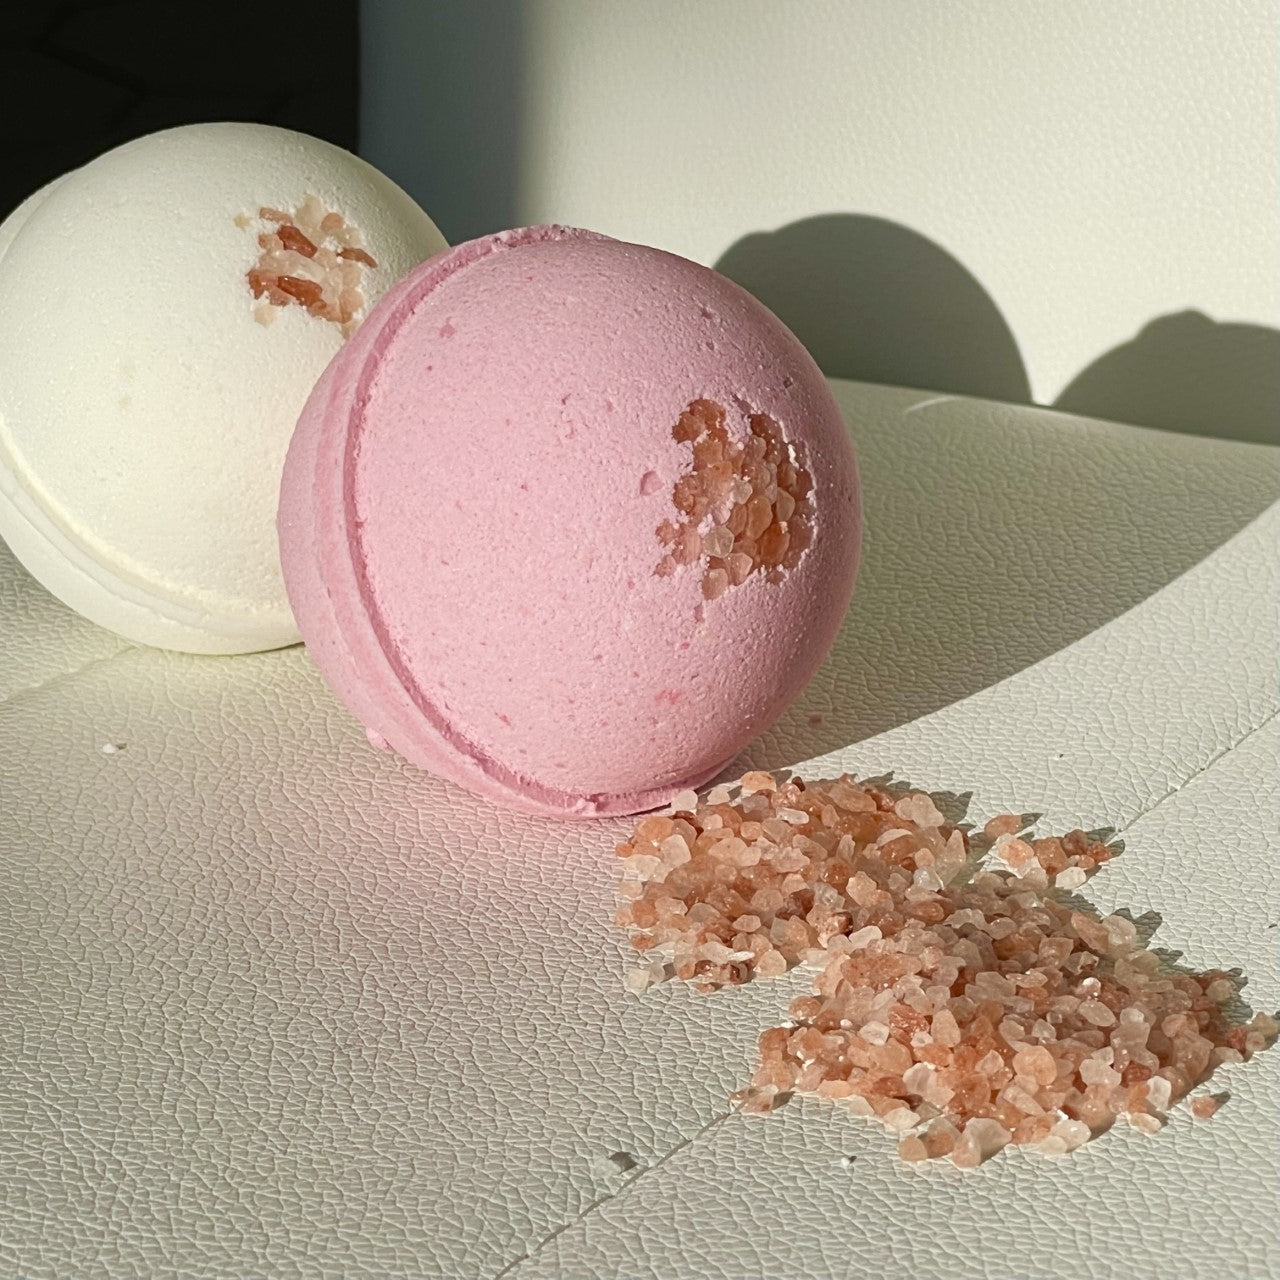 Blossoming Serenity - Cherry Blossom & Himalayan Salt Bath Bomb